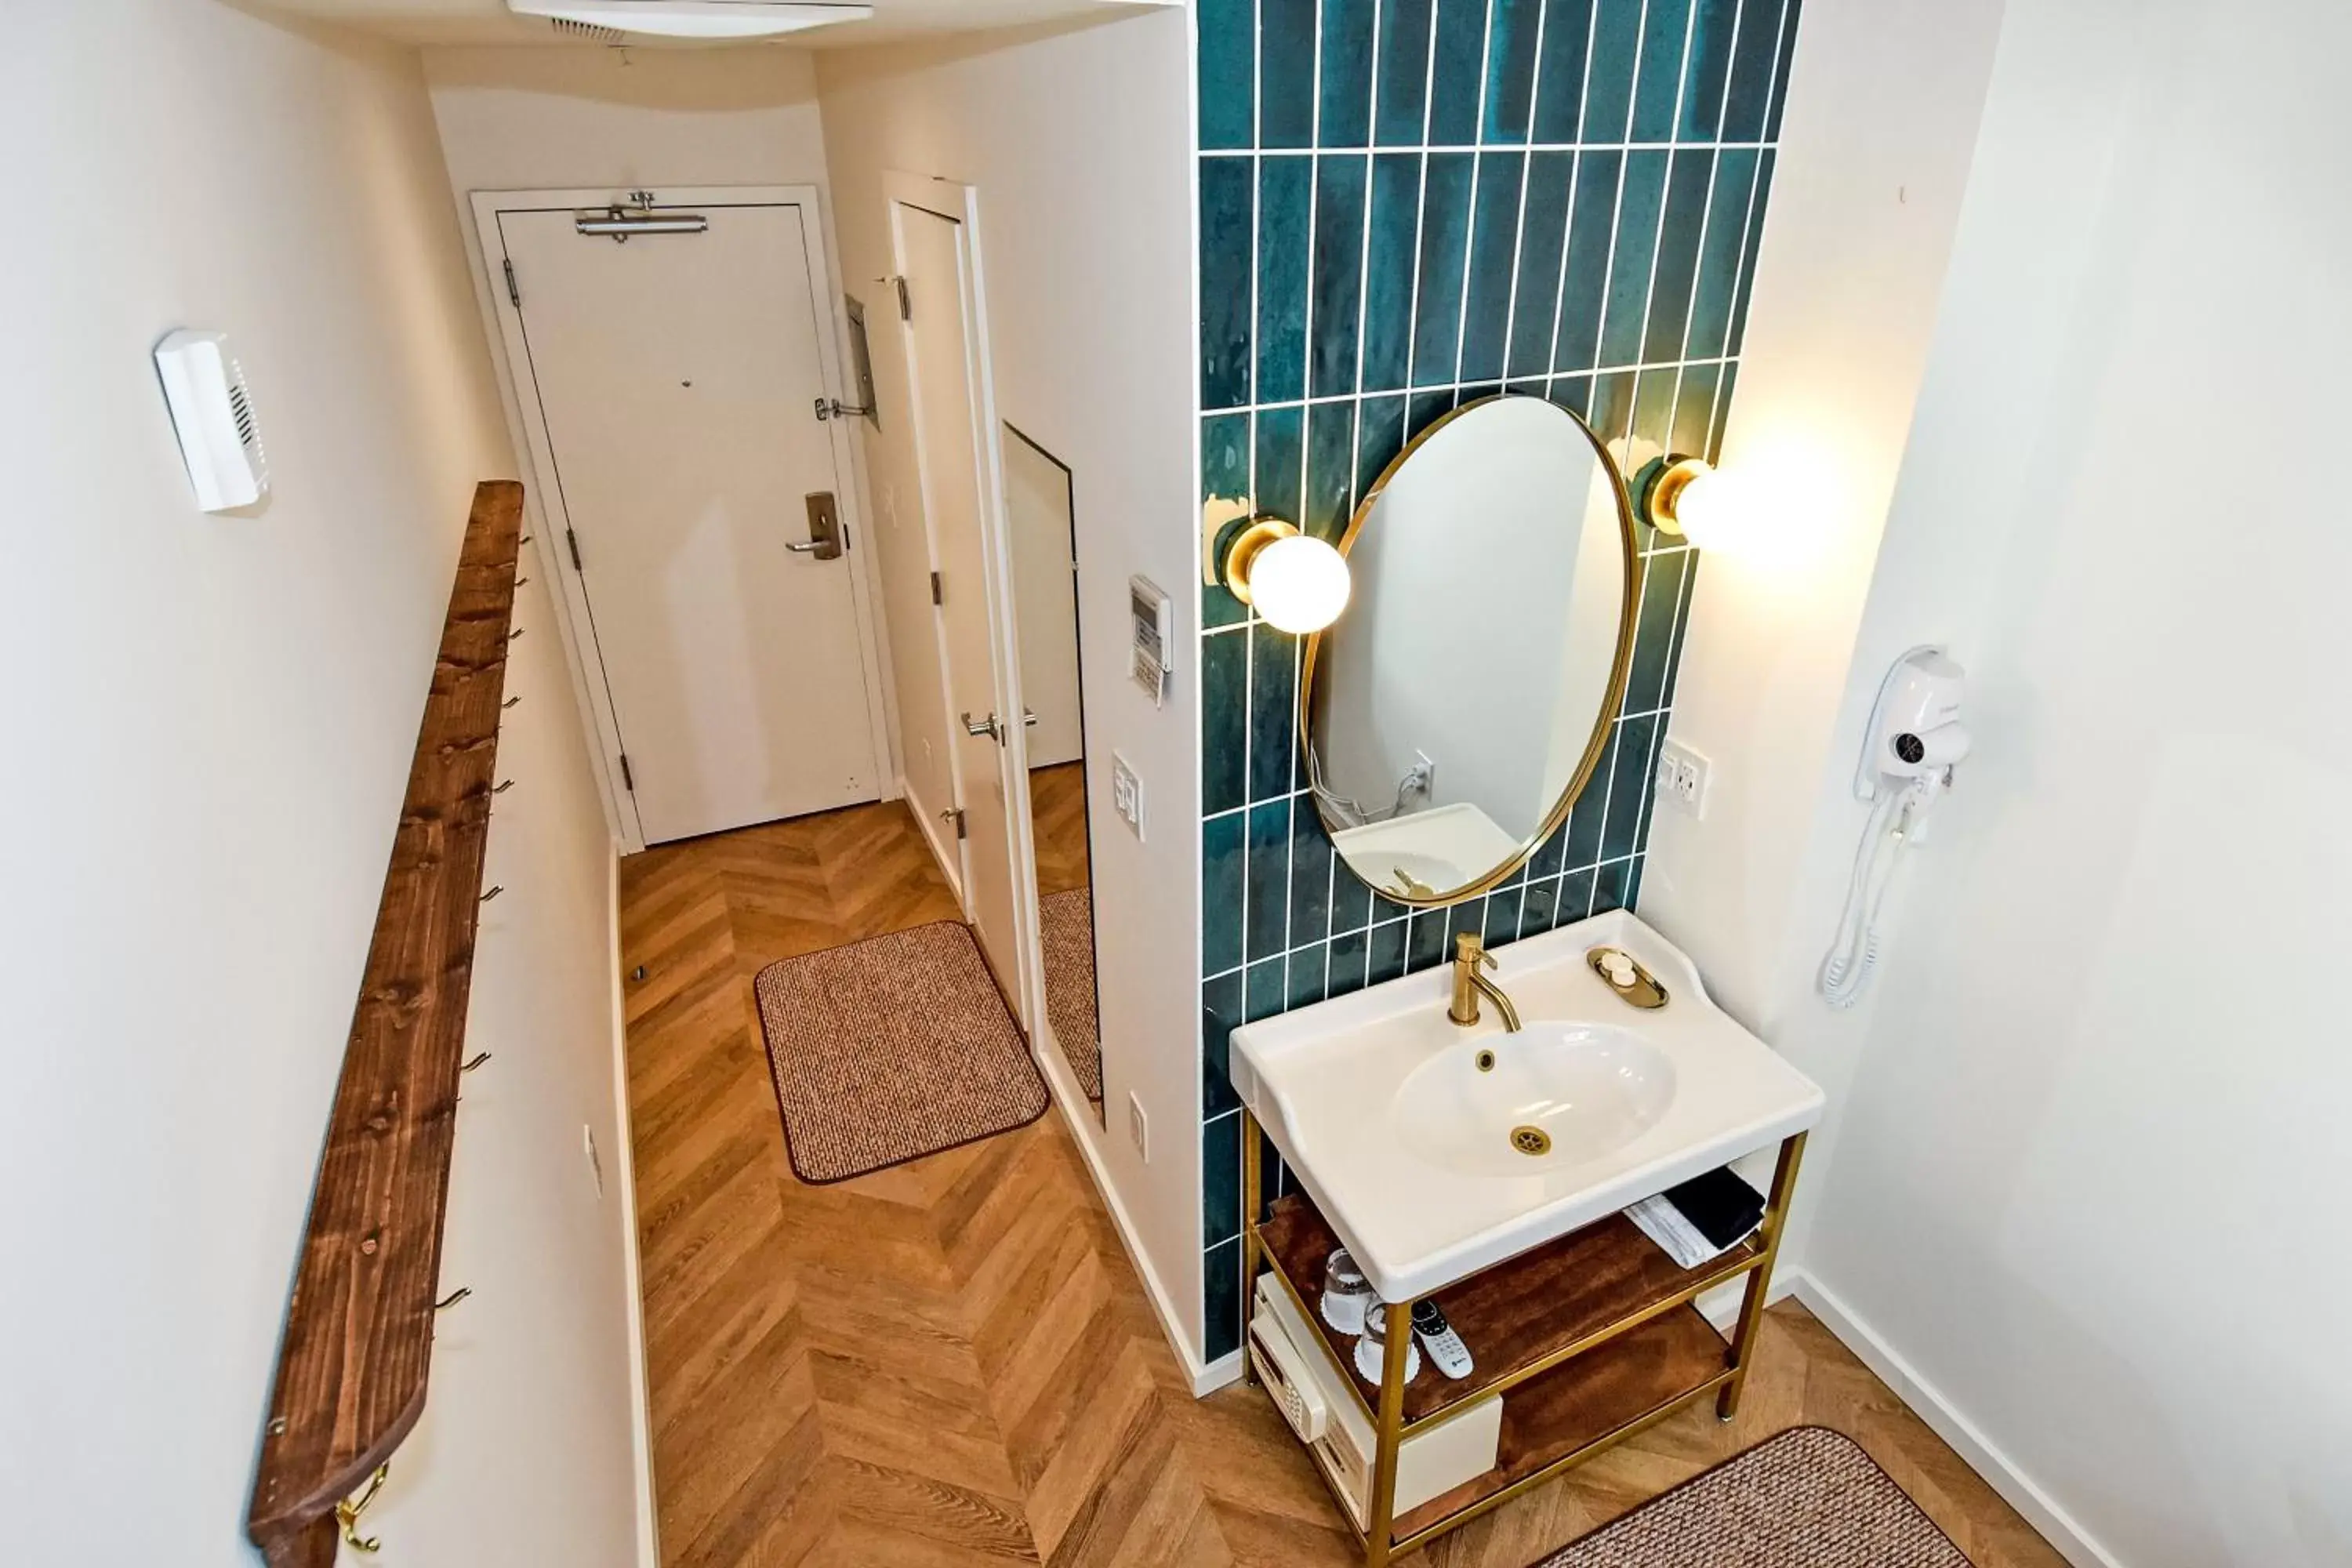 Photo of the whole room, Bathroom in HighRoad Washington DC